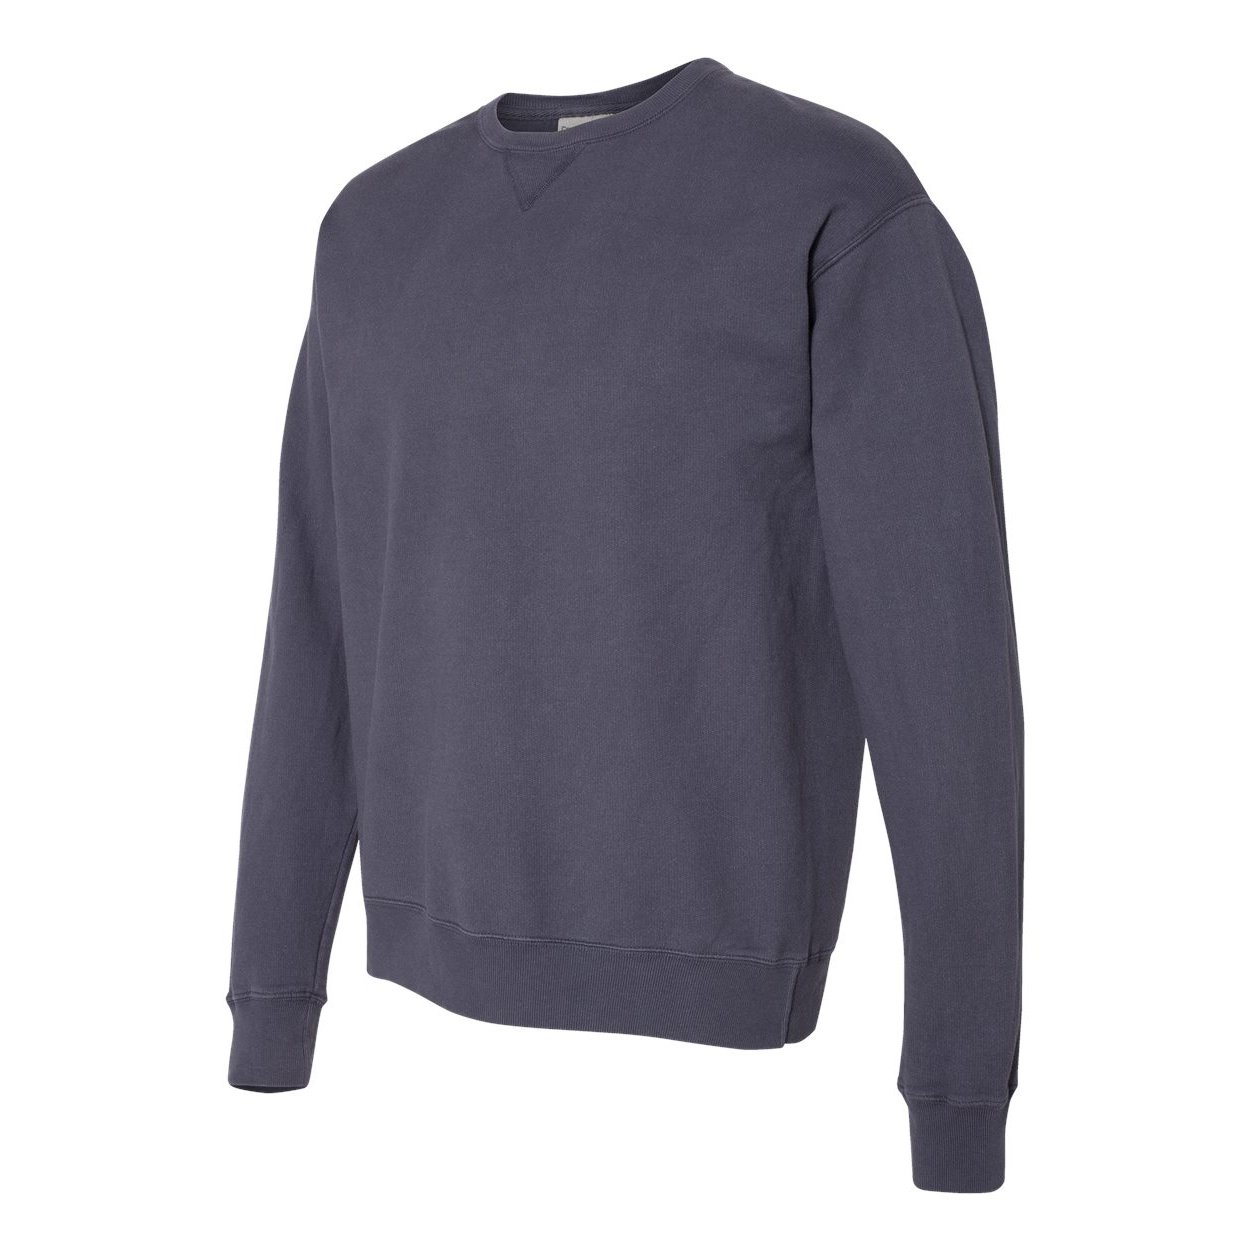 TCLAD ComfortWash by Hanes - Garment Dyed Crewneck Sweatshirt